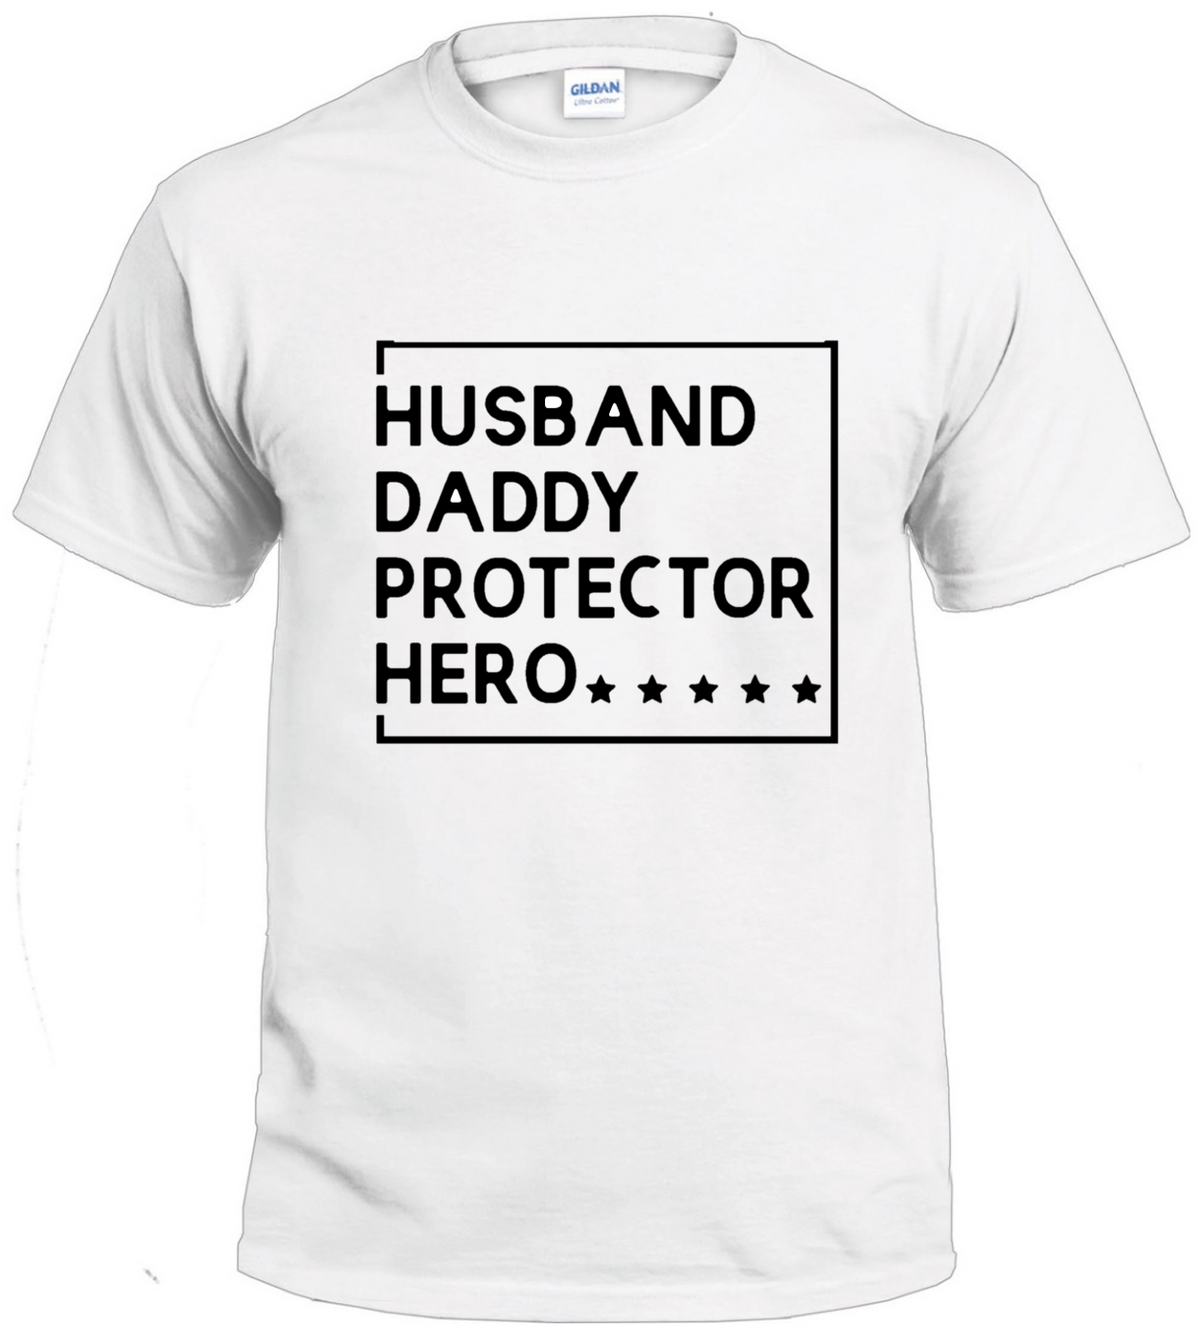 Husband Daddy Protector Hero t-shirt